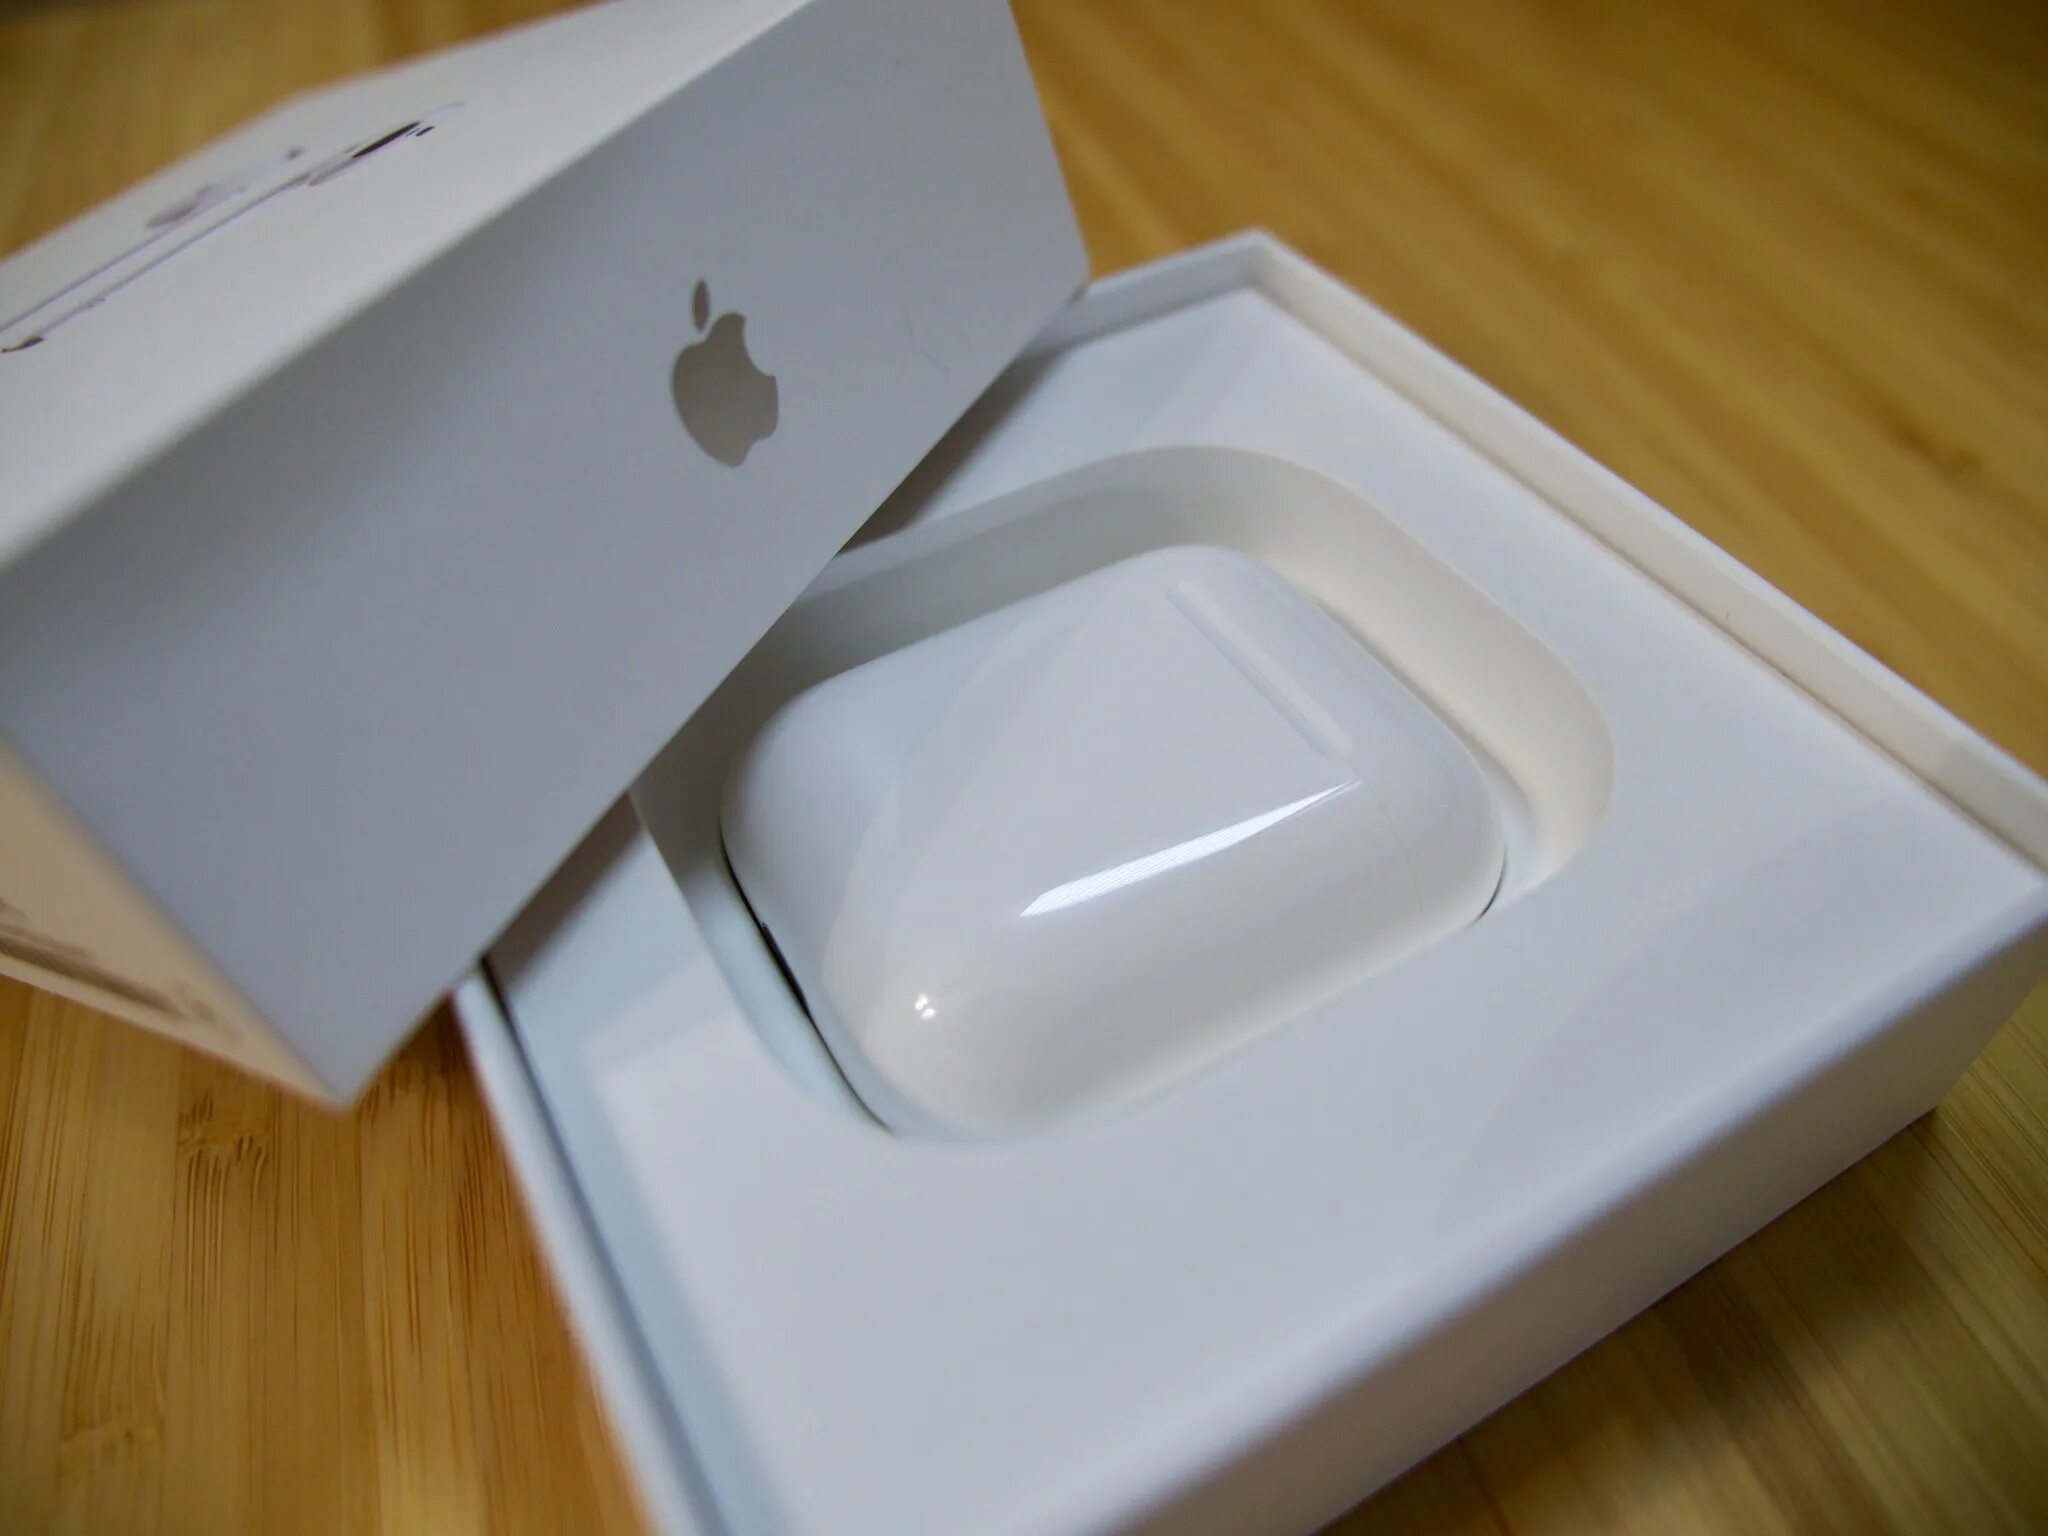 Apple AIRPODS 2 коробка. Apple AIRPODS Pro 2 коробка. Аирподсы эпл. Apple аирподс коробка. Iphone airpods 1